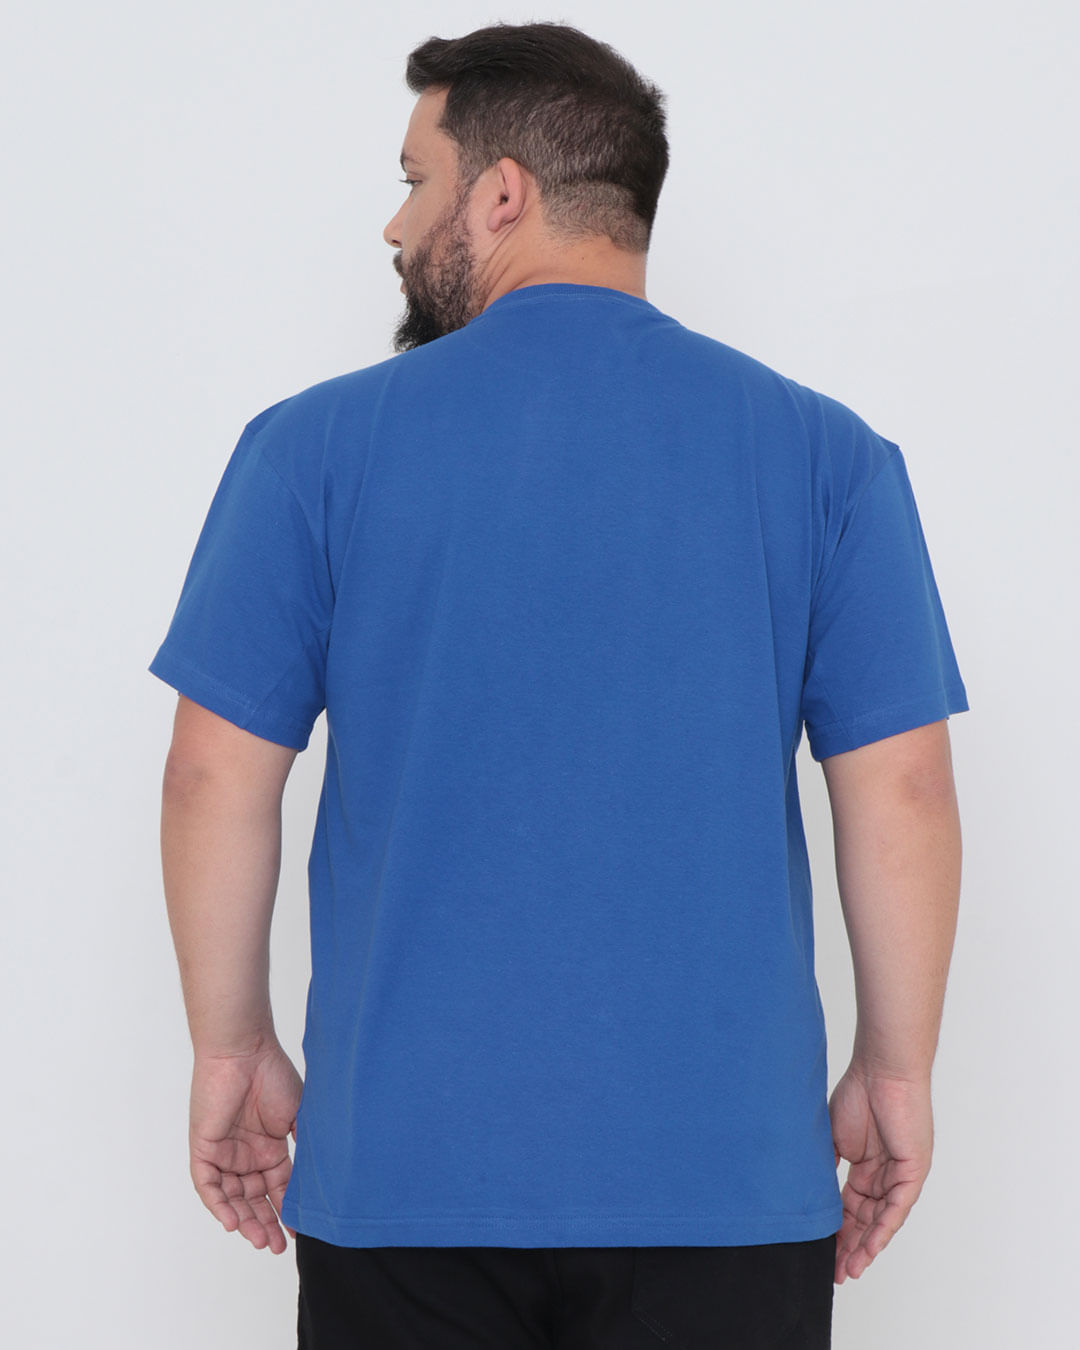 Camiseta-Plus-Size-Manga-Curta-Estampa-Fatal-Azul-Escuro